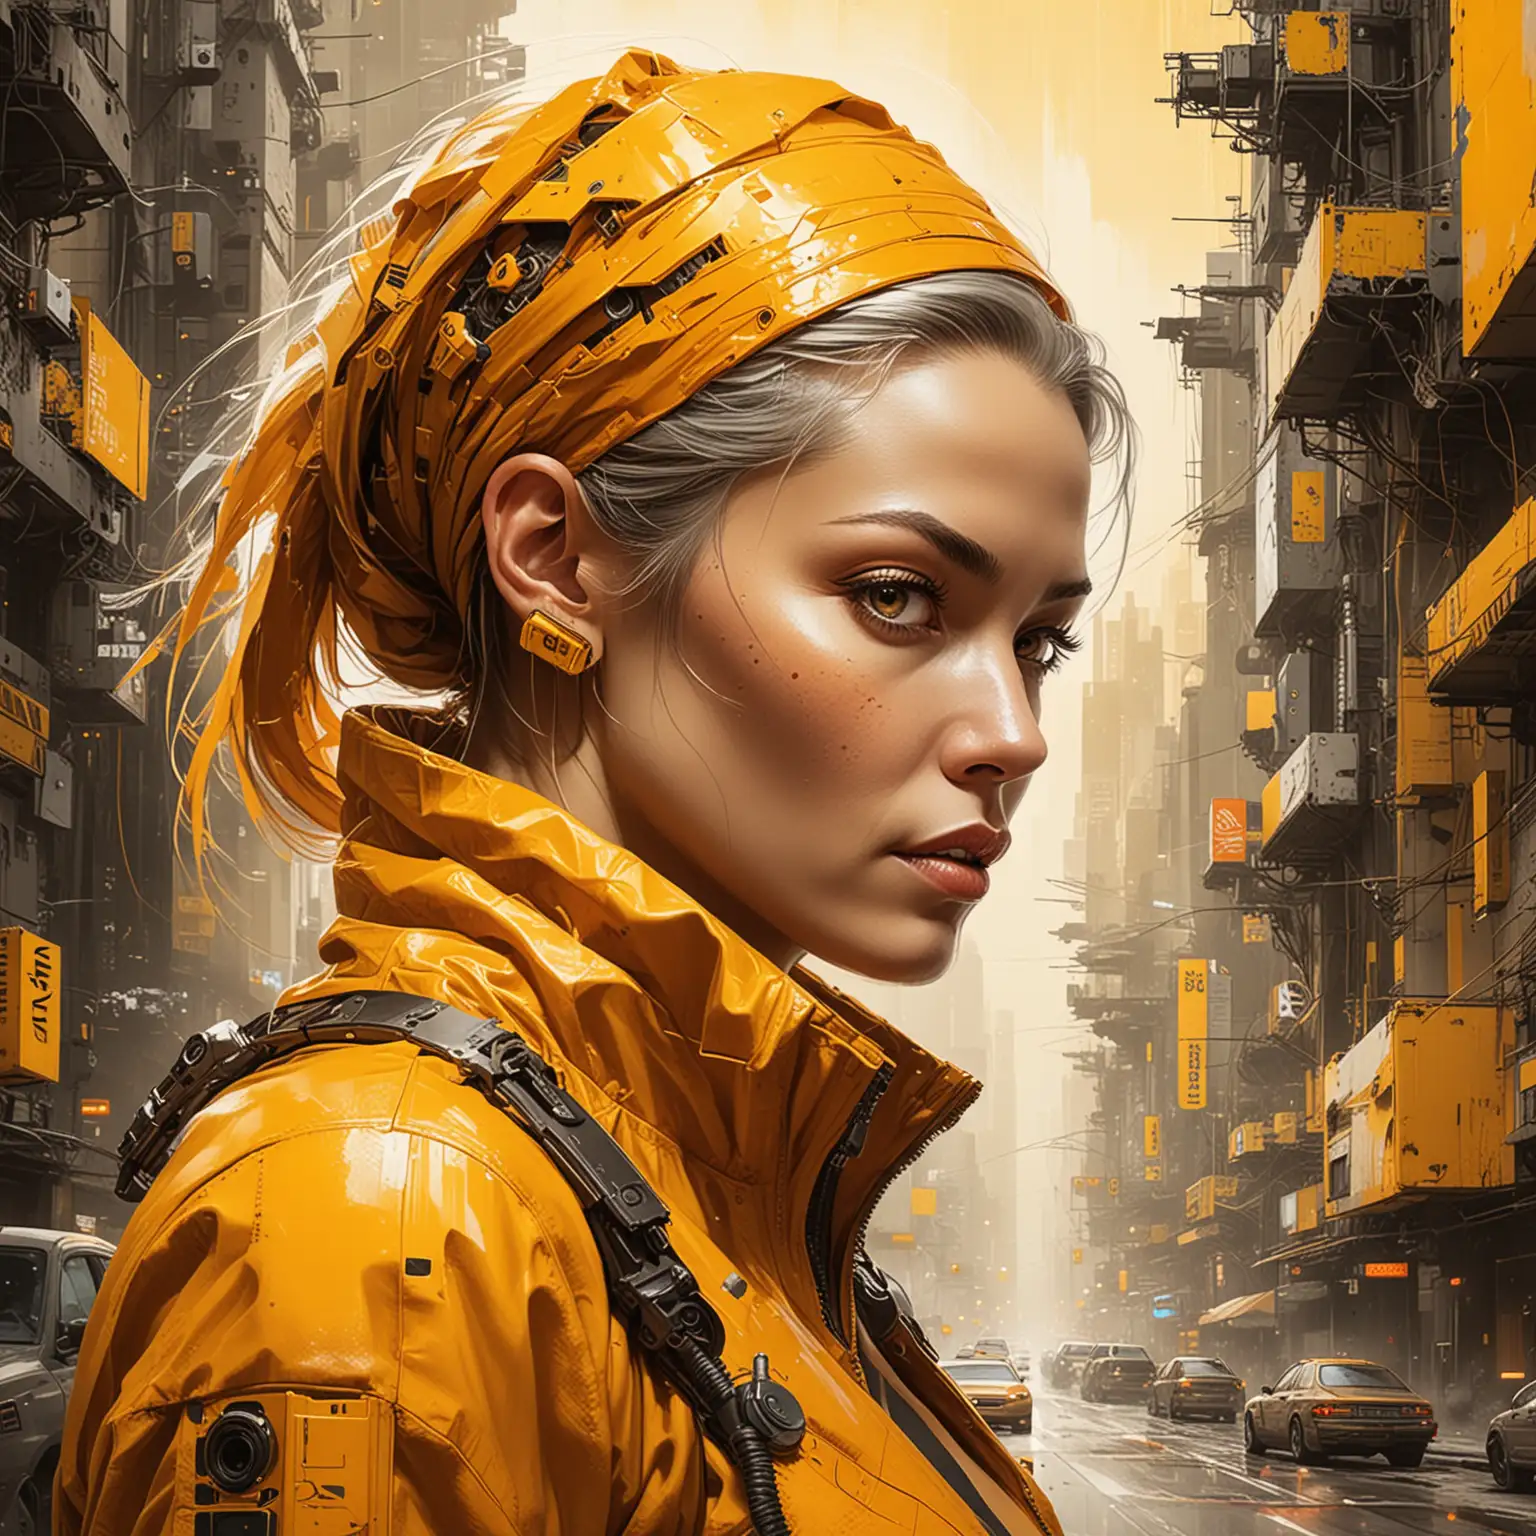 Futuristic Cyberpunk Woman in Abstract Dystopia Art